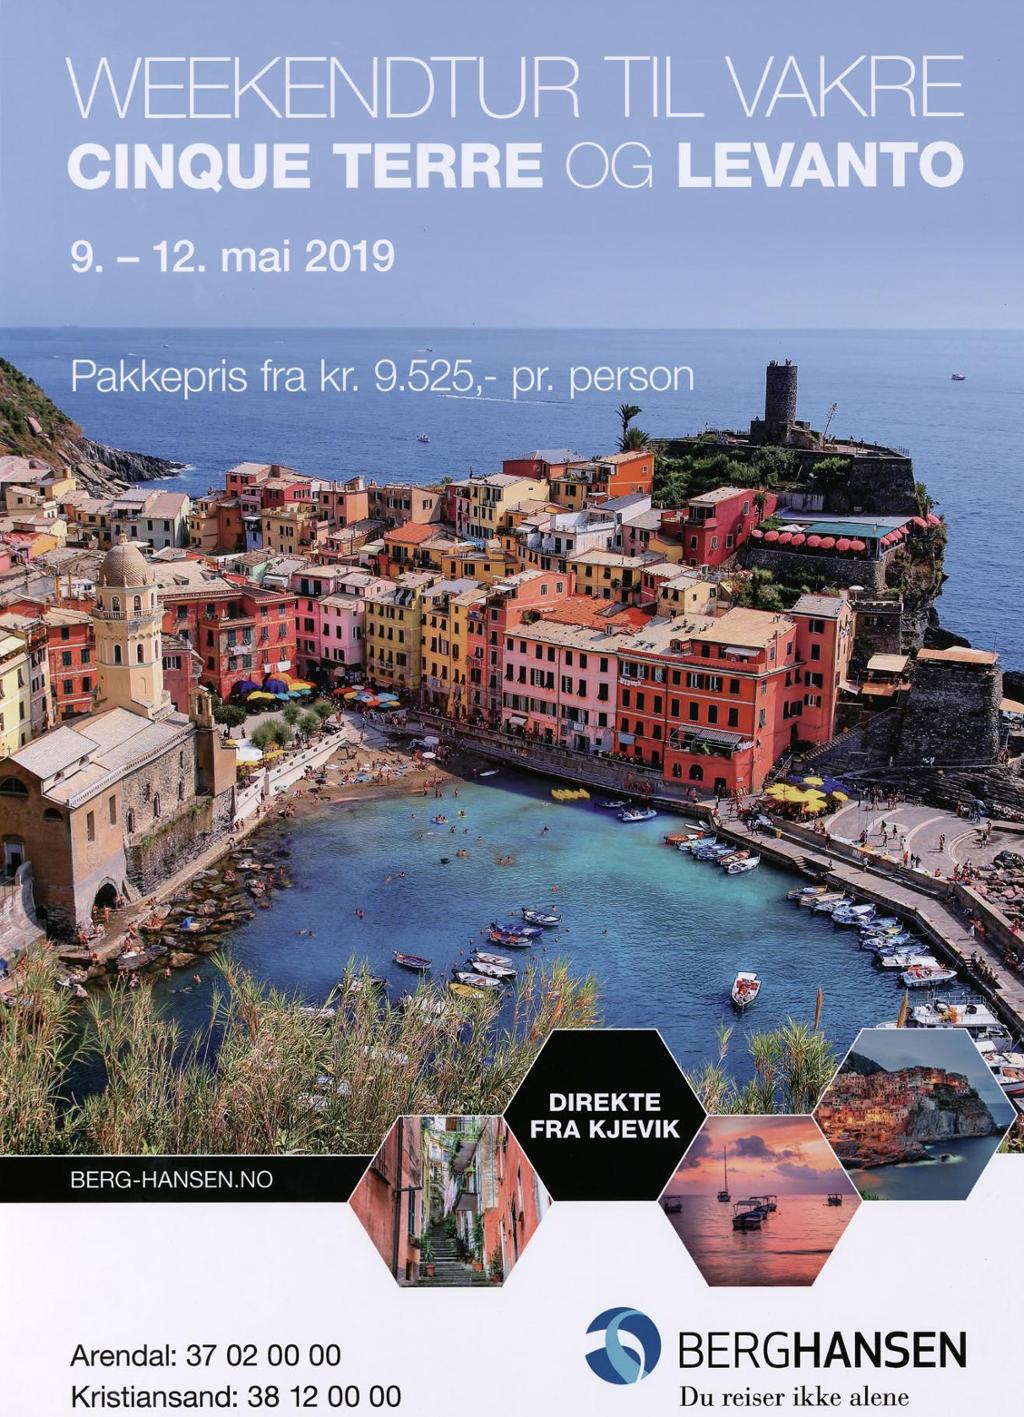 Reklameplakat for reisebyrået Berg-Hansen, som tilbyr pakkepris på weekendtur til Cinque Terre og Levanto.